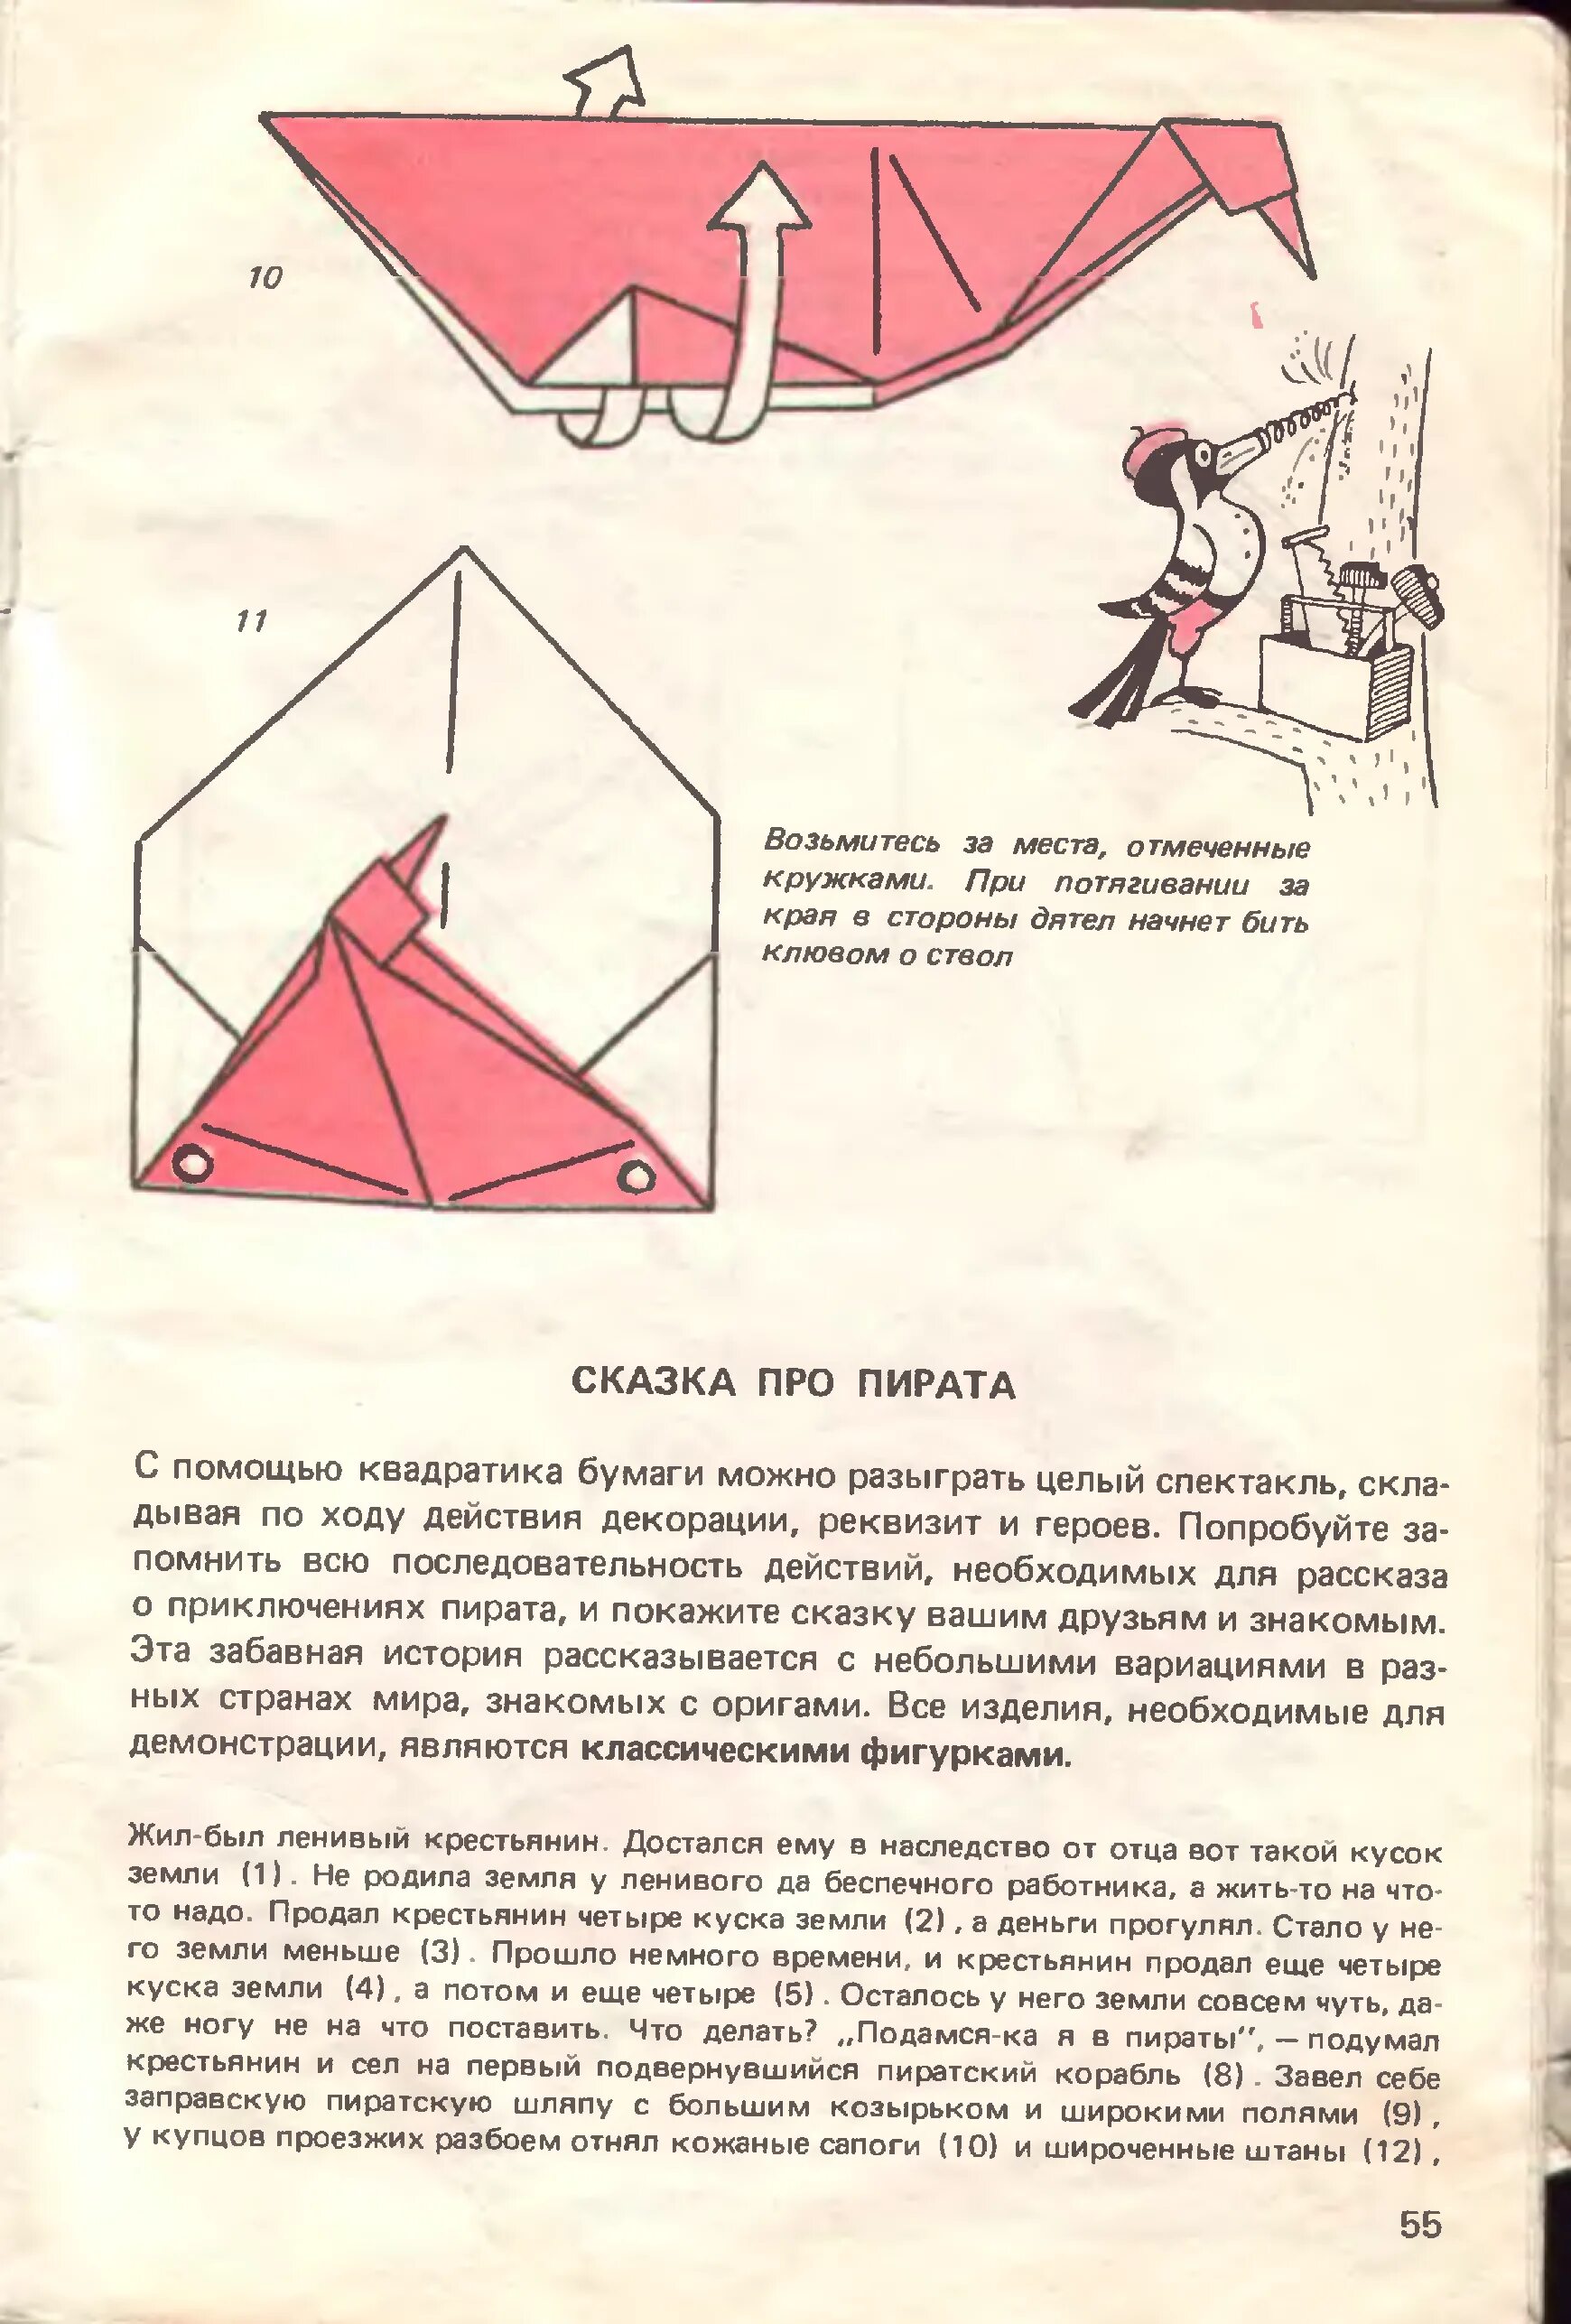 Сказка из бумаги. Оригами сказка. Оригами сказка из бумаги. Бумажная сказка оригами про мужика.